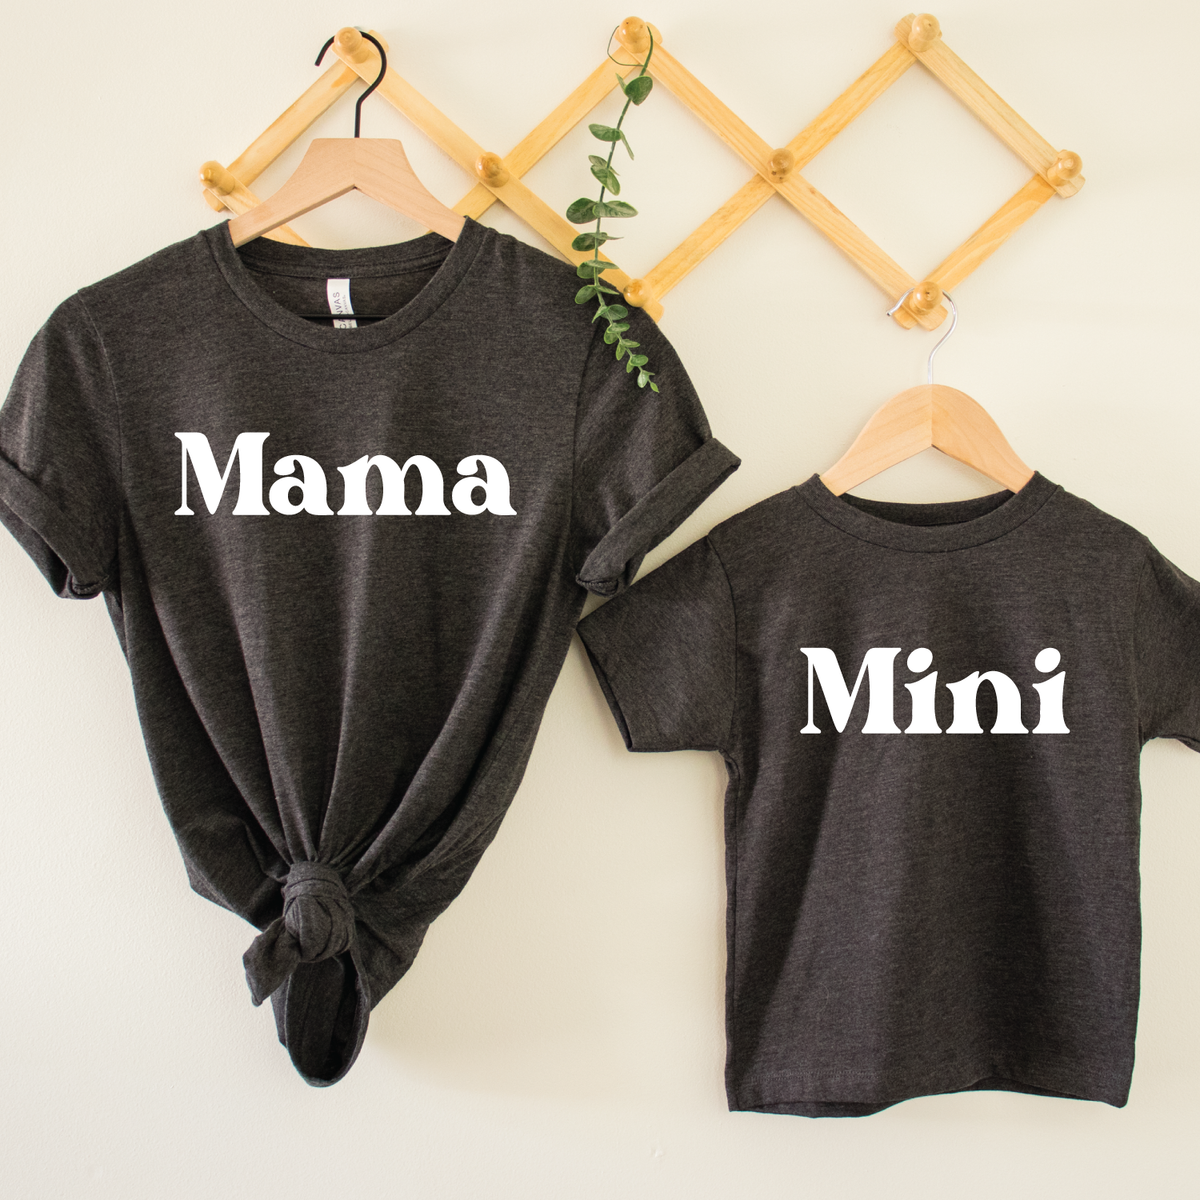 Mama & mini graphic tees no